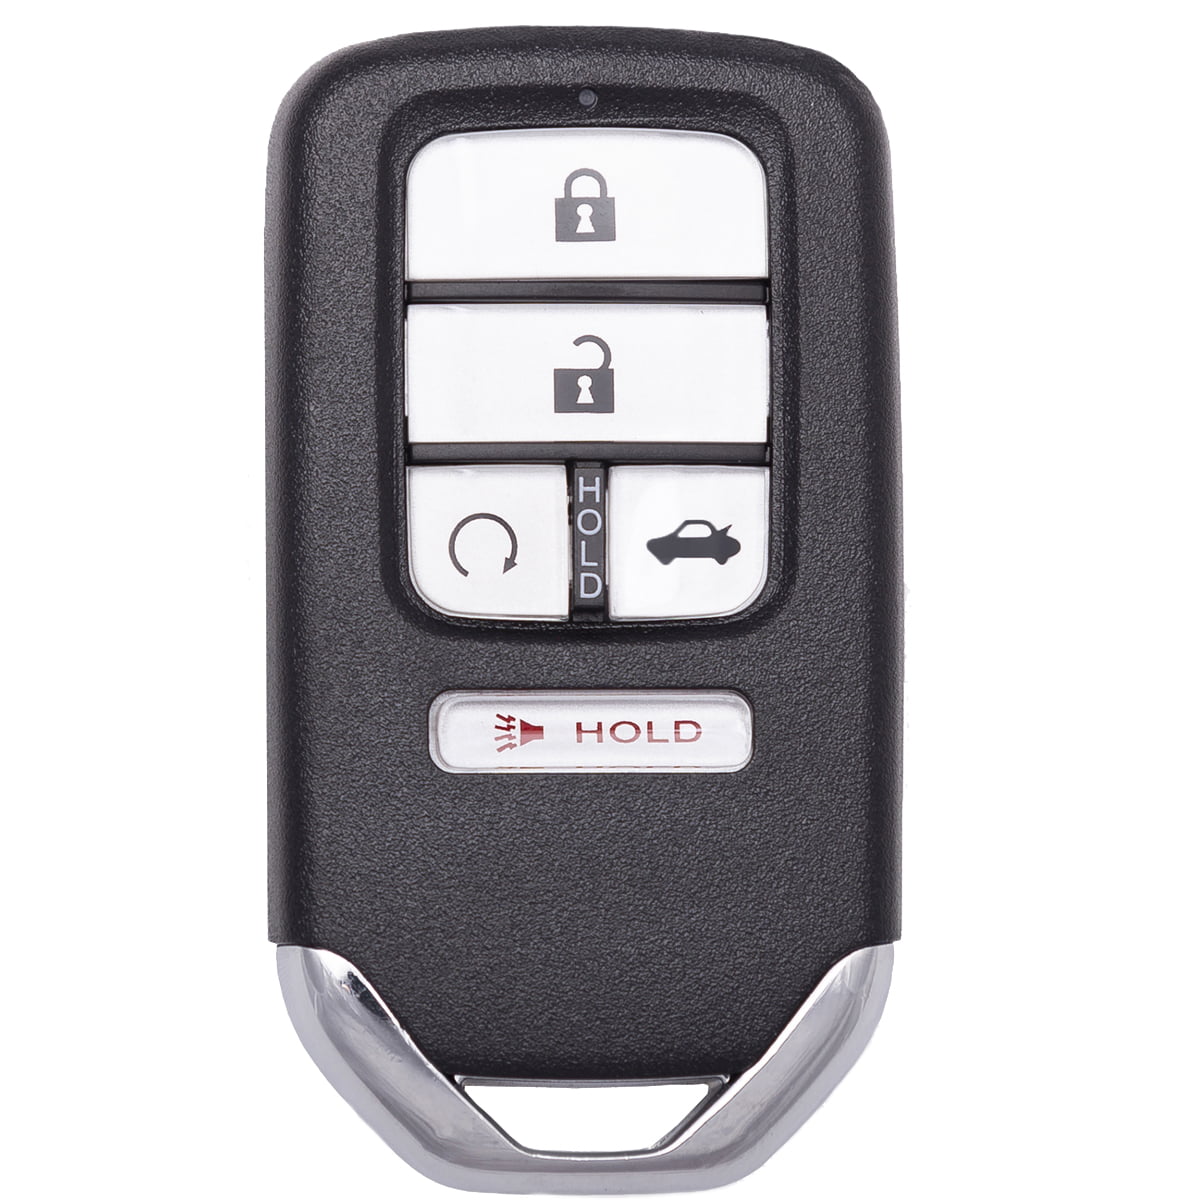 Remote For 2018 Honda Fit Keyless Entry Car Key Fob